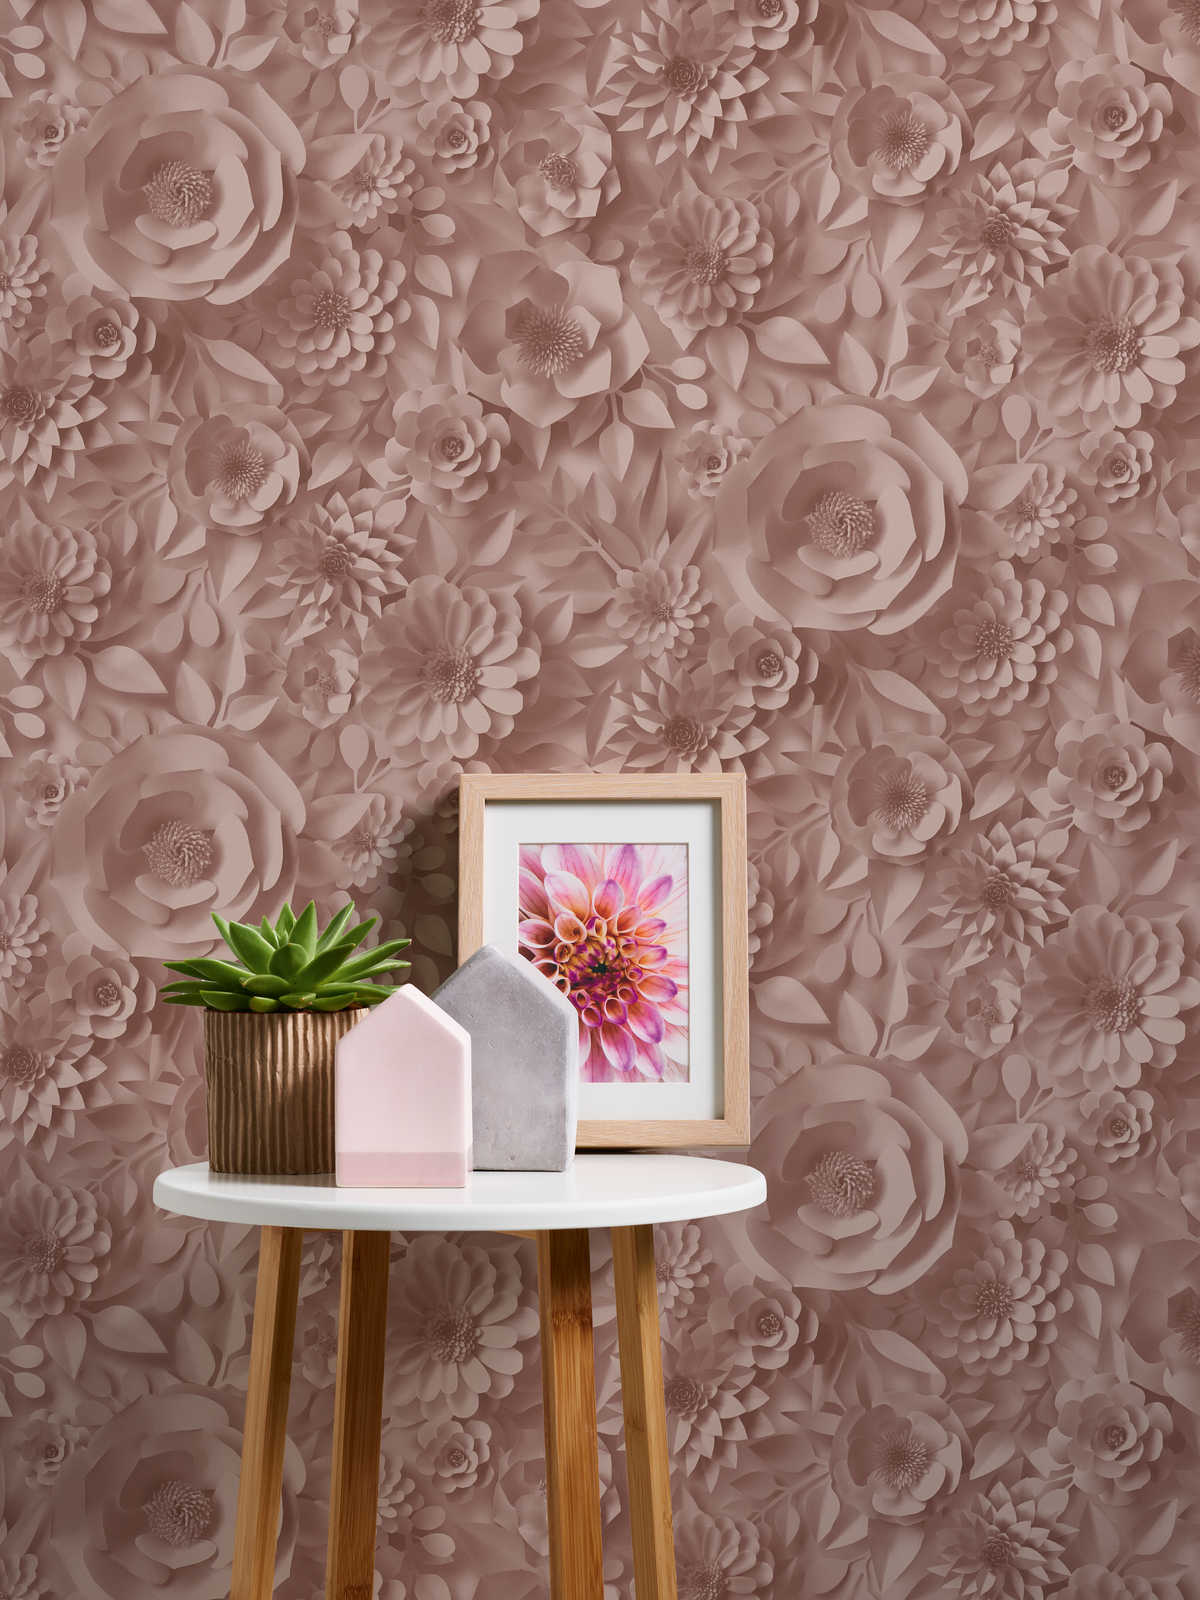             Papel pintado 3D con flores de papel, patrón floral gráfico - Rosa
        